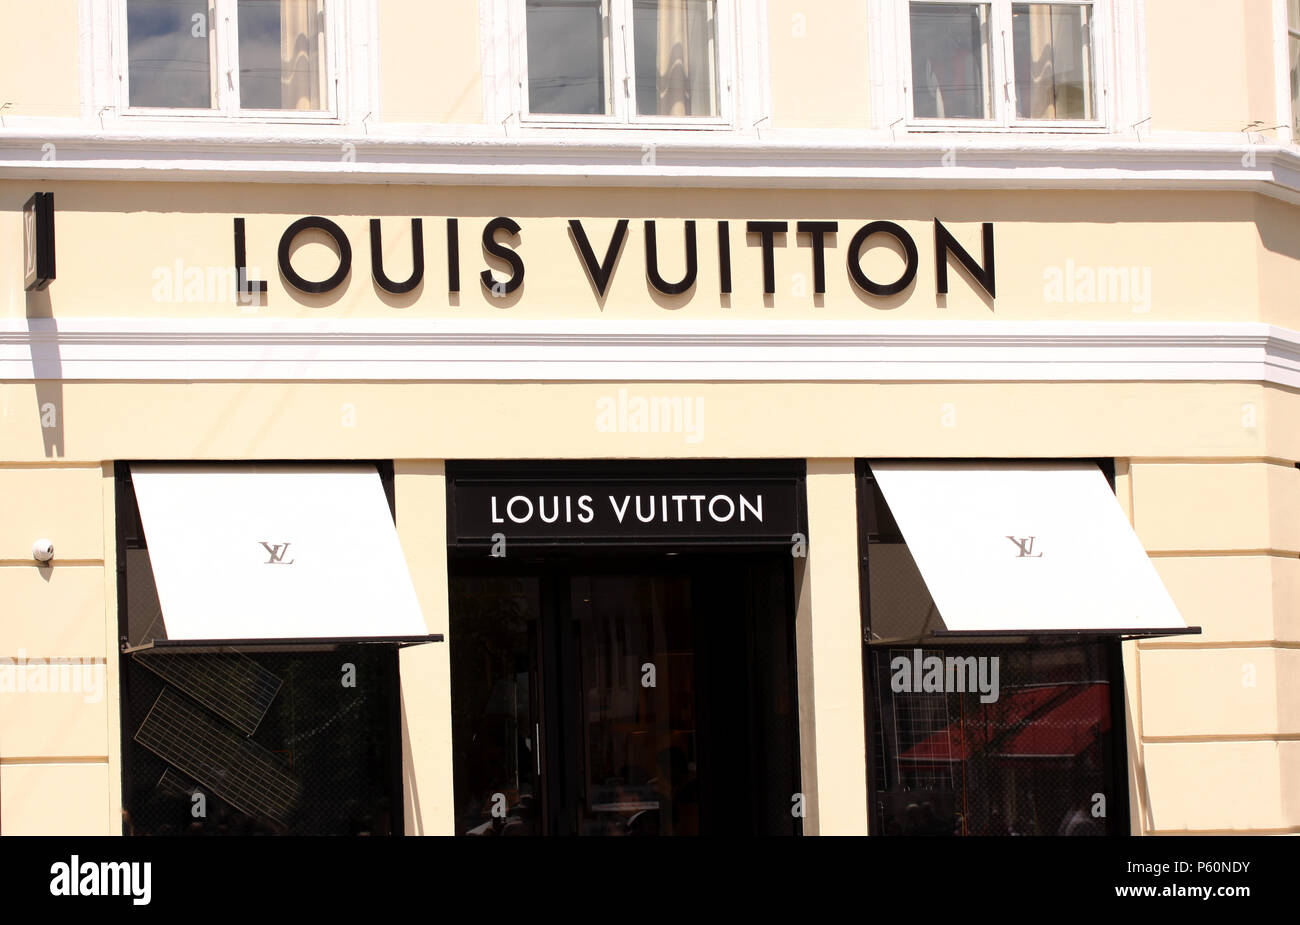 Copenhagen, Denmark - June 26, 2018: Louis Vuitton Logo sign panel on shop. Louis Vuitton is a famous high end fashion house manufacturer and luxury r Stock Photo